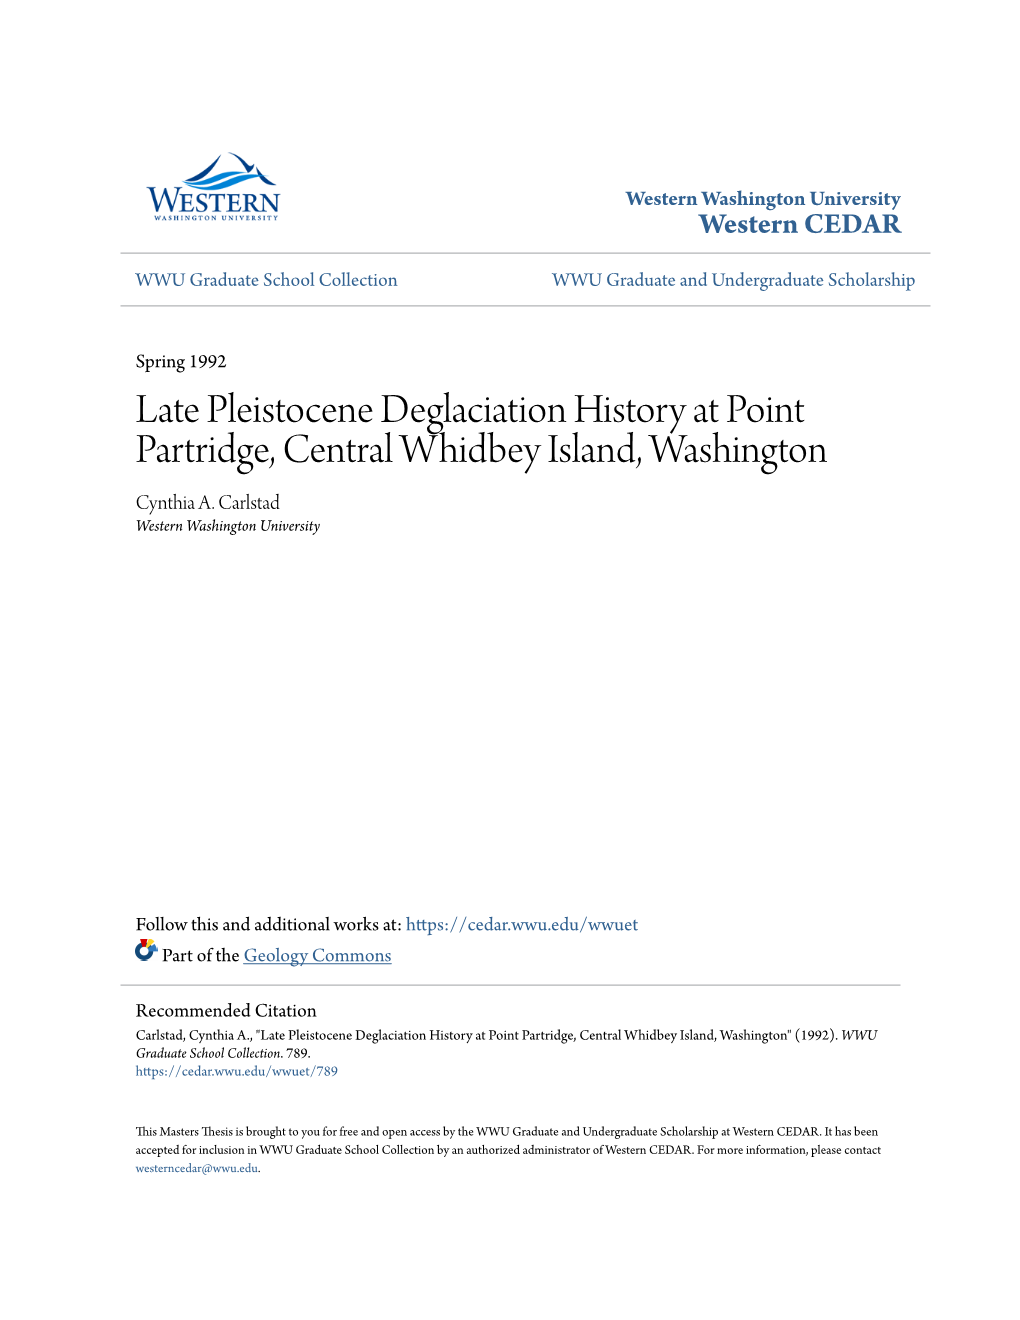 Late Pleistocene Deglaciation History at Point Partridge, Central Whidbey Island, Washington Cynthia A